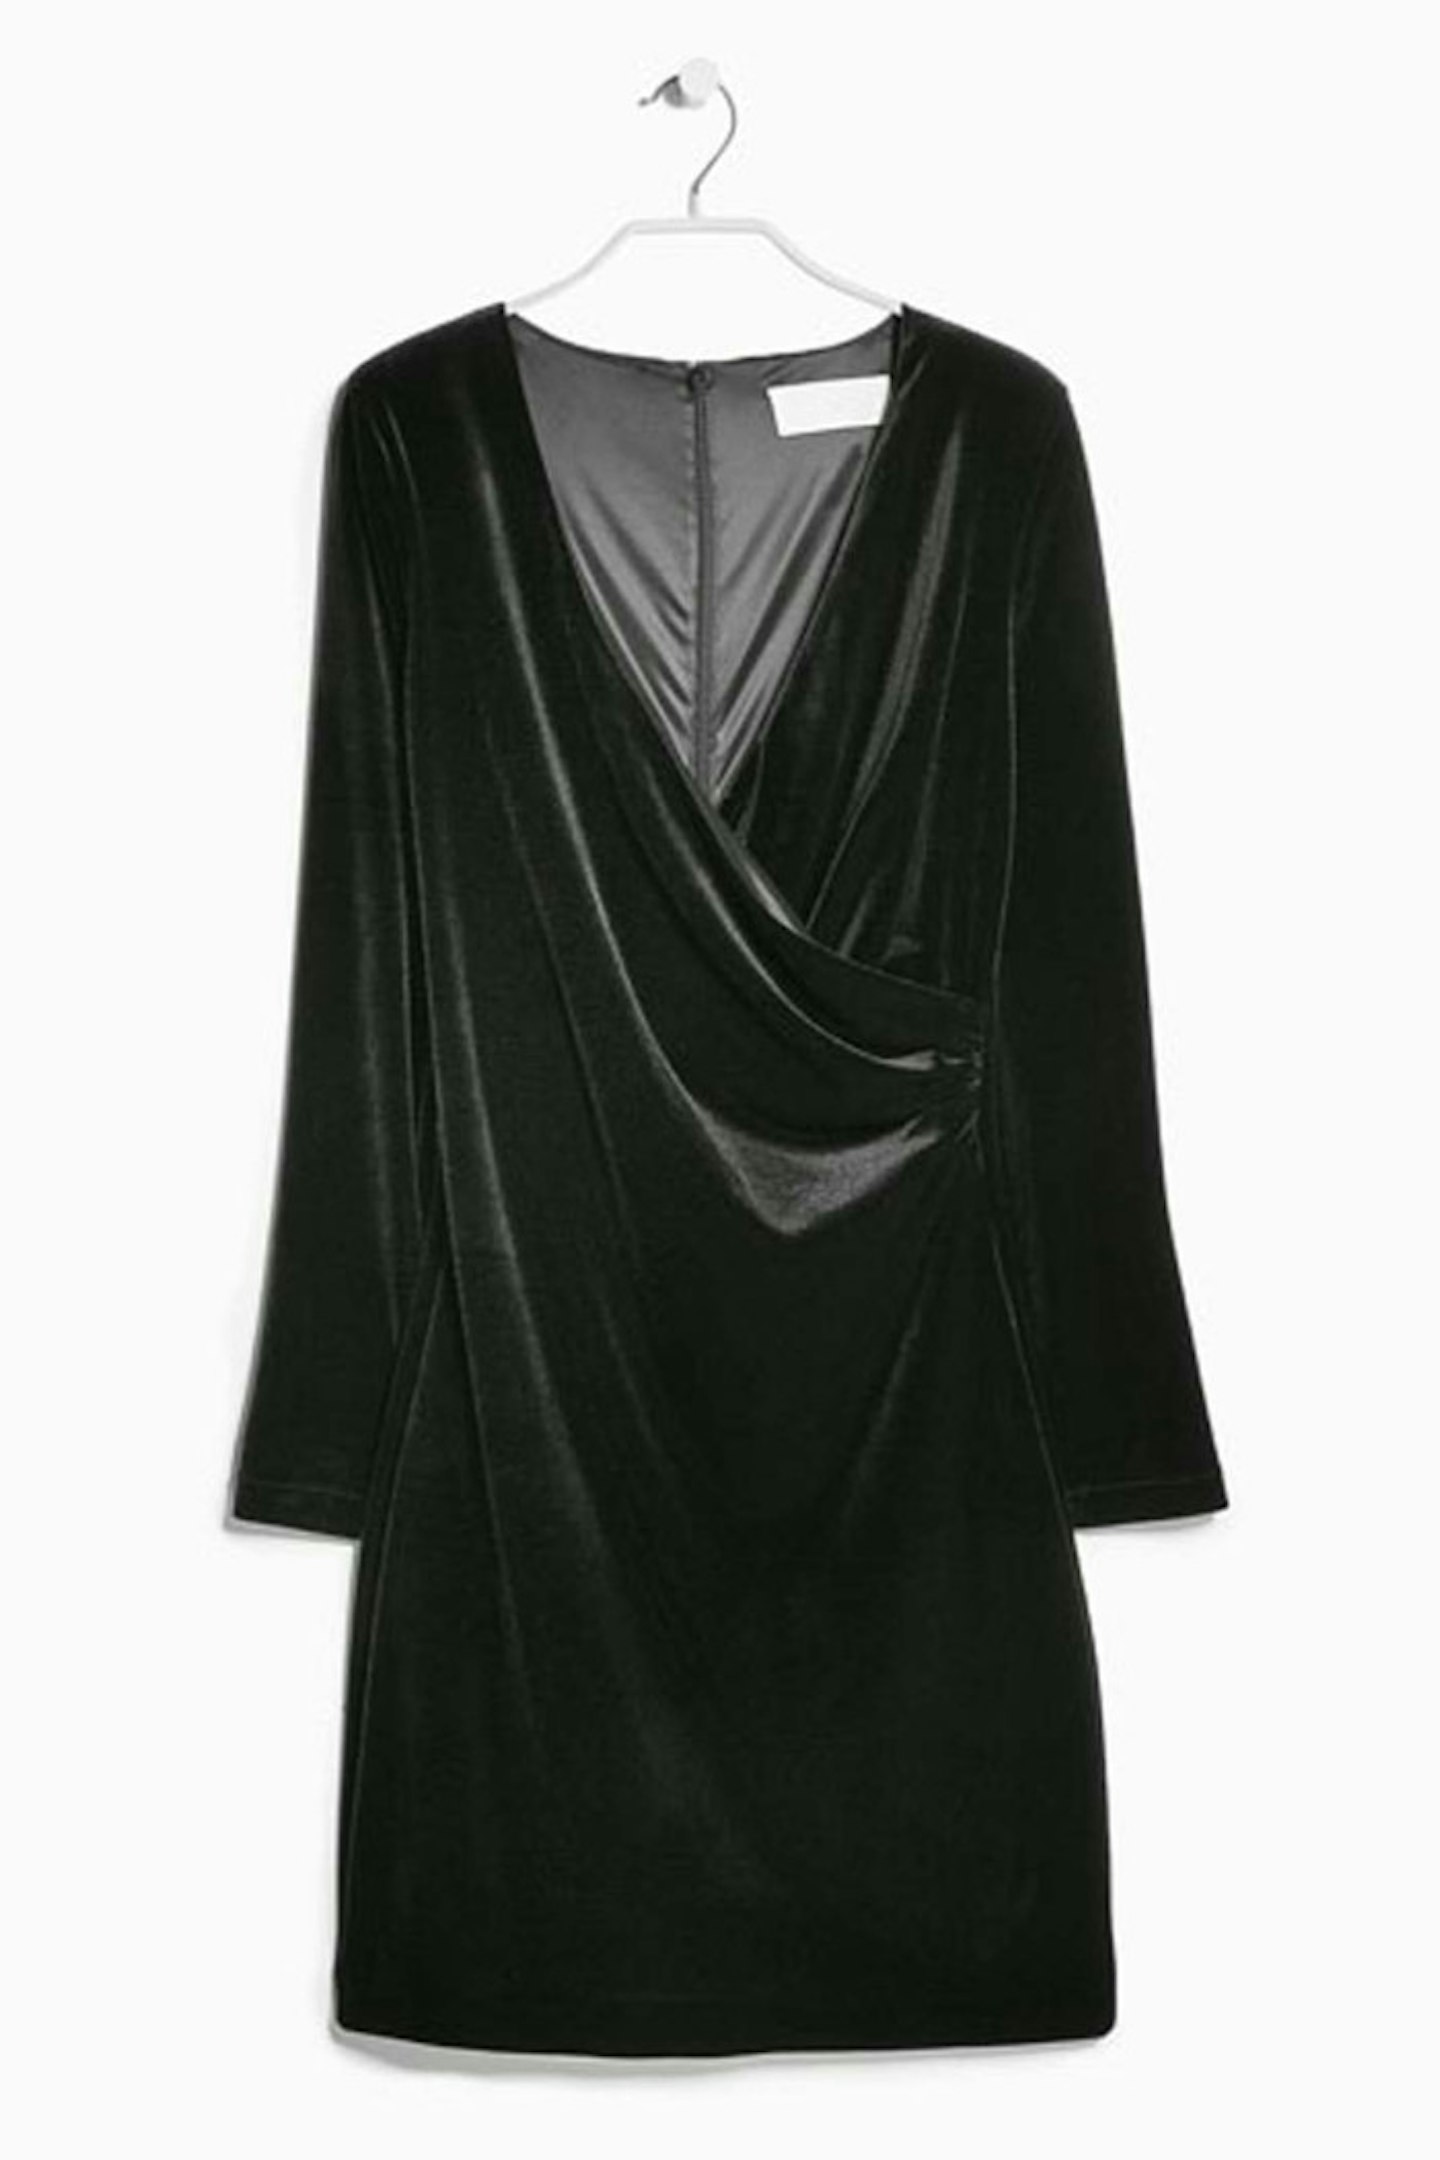 Premium velvet wrap dress, £59.99, Mango